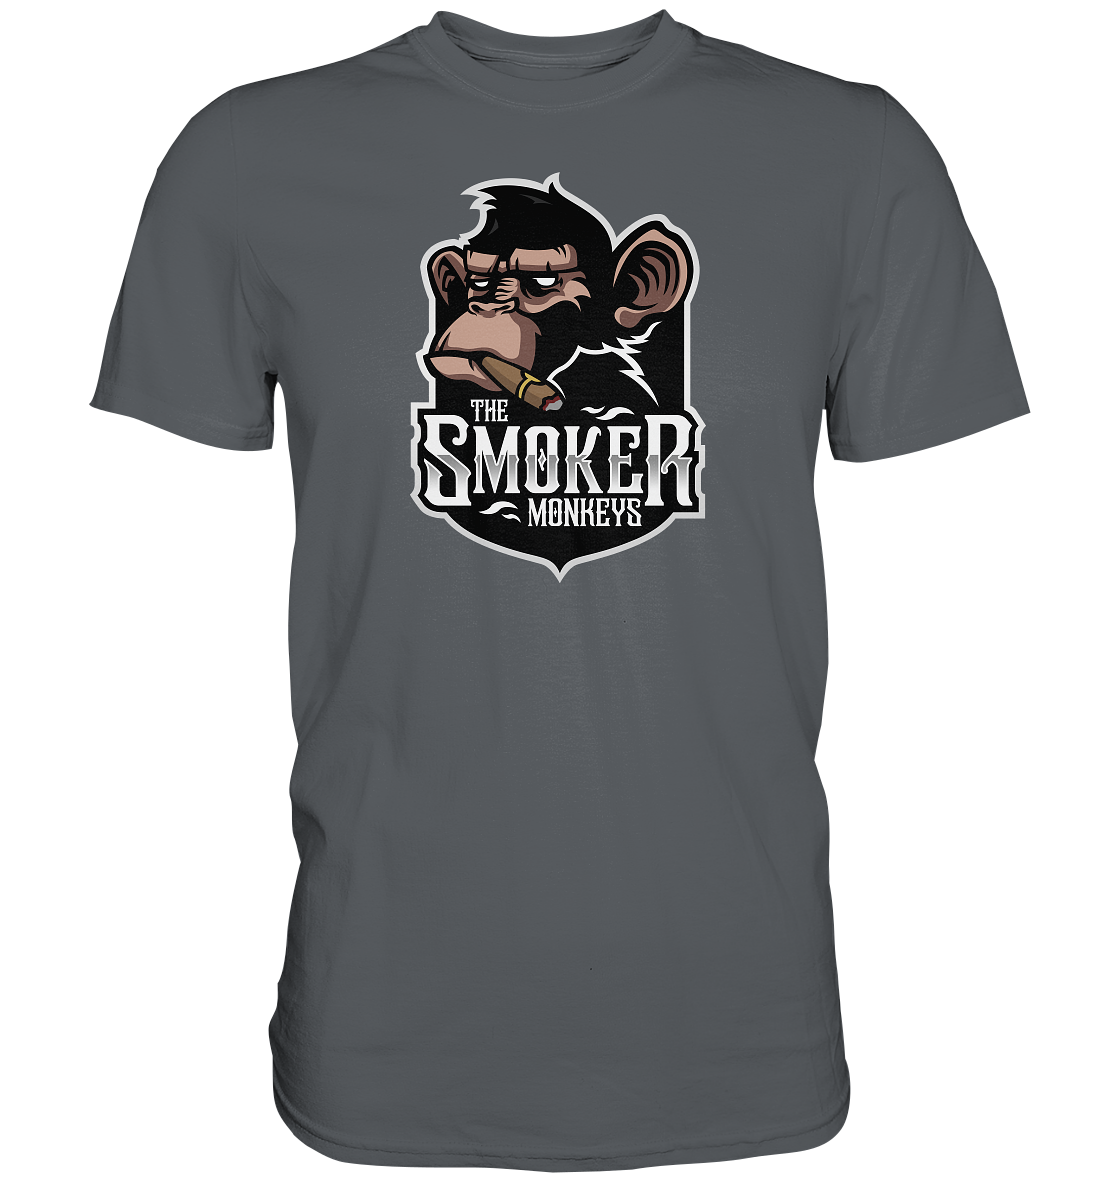 THE SMOKER MONKEYS - Basic Shirt